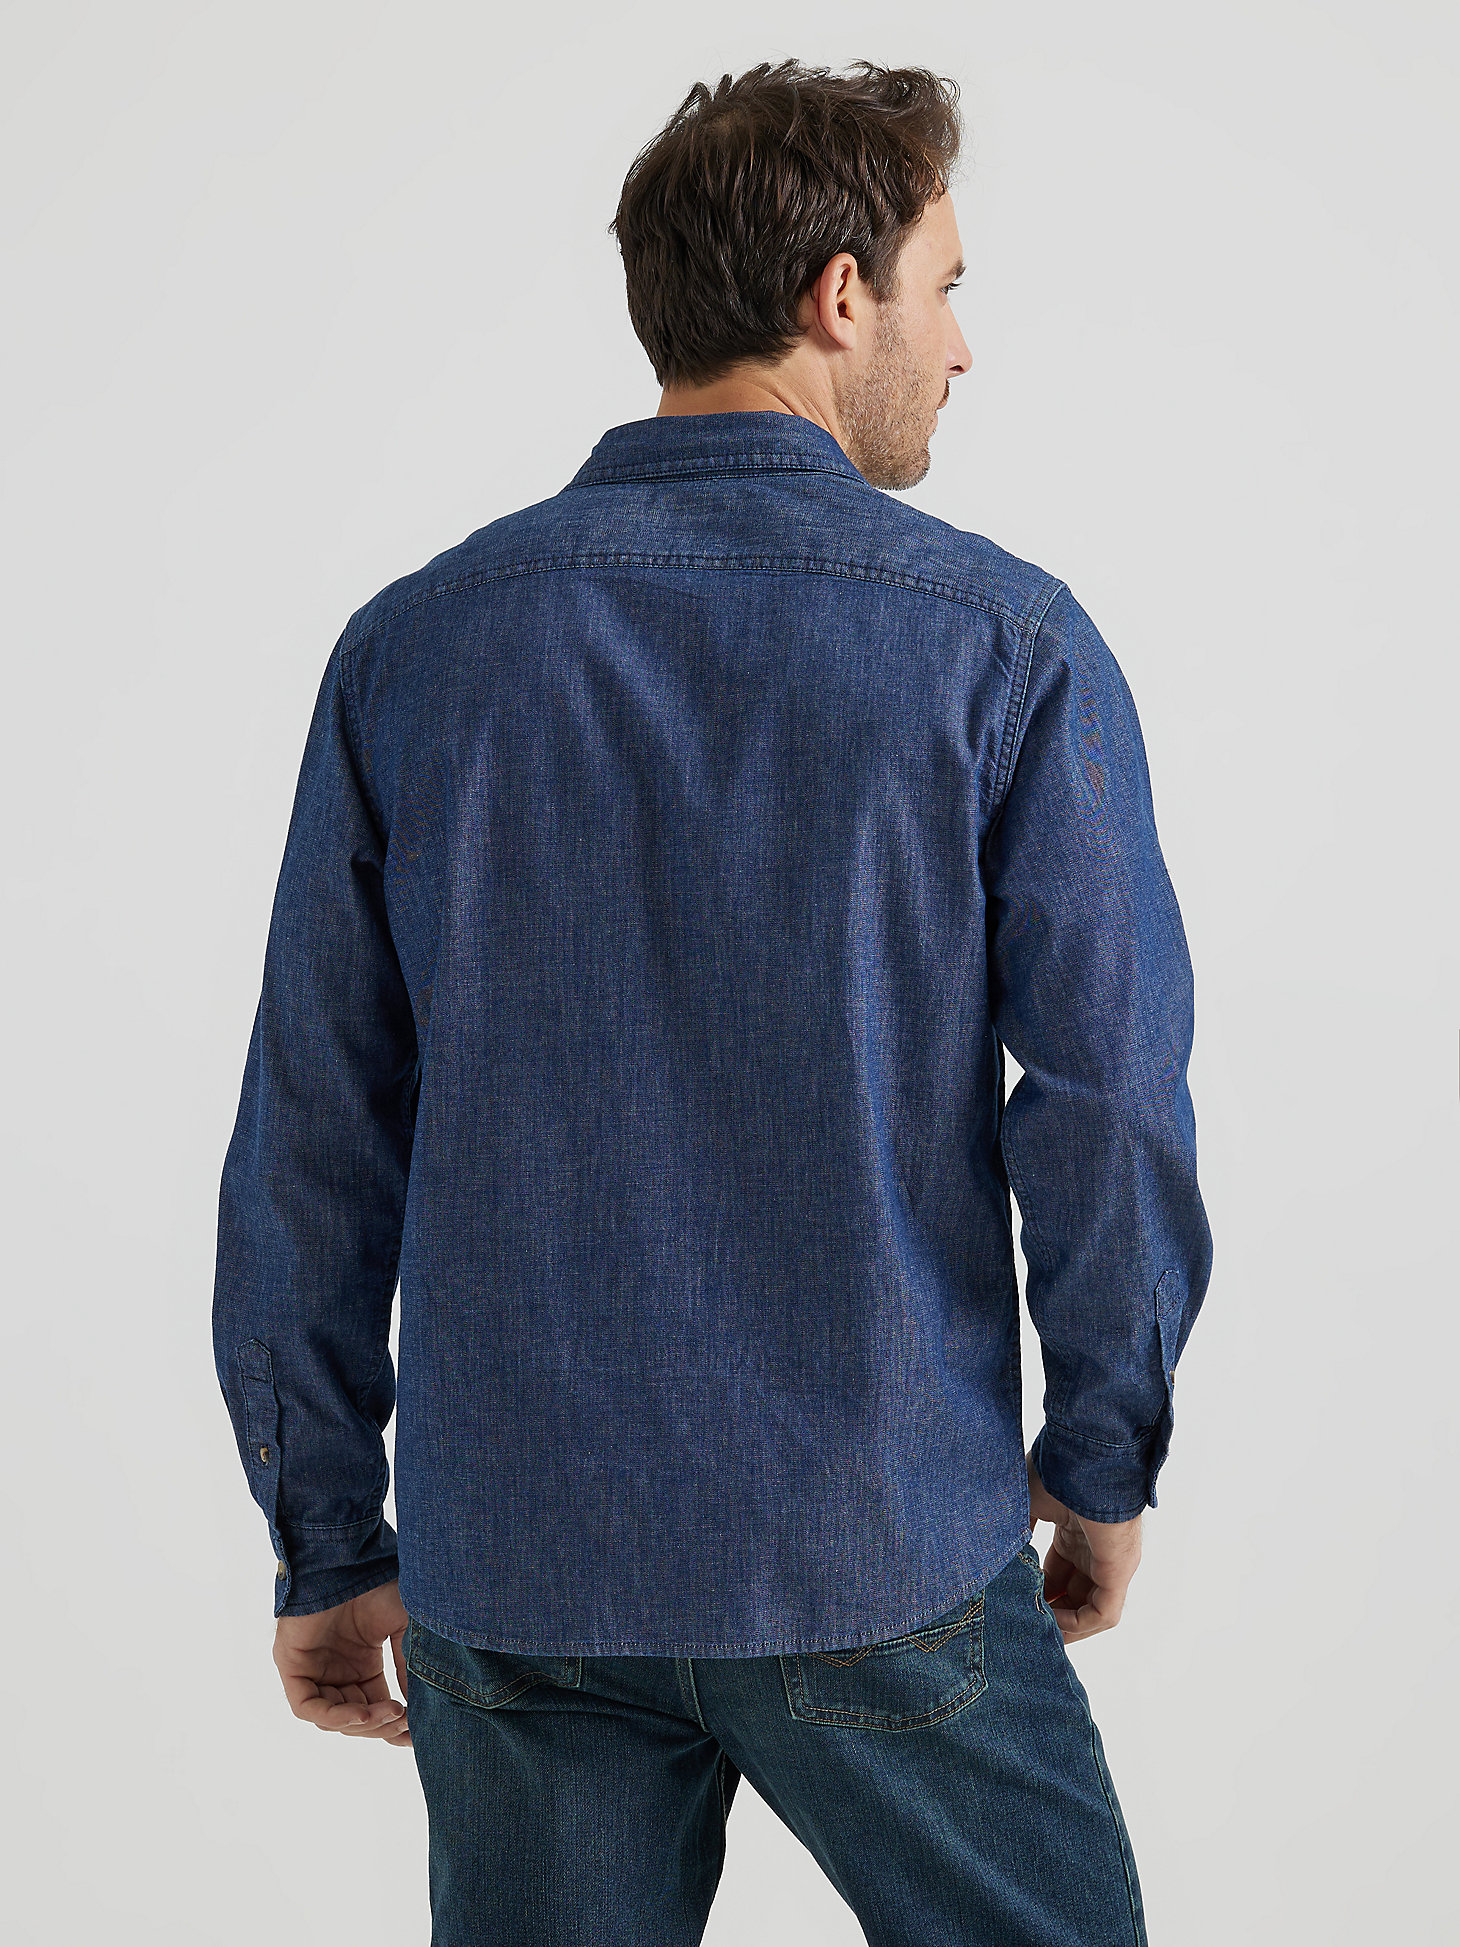 Men’s Wrangler® Long Sleeve Twill/Denim Shirt in Rinse alternative view 1